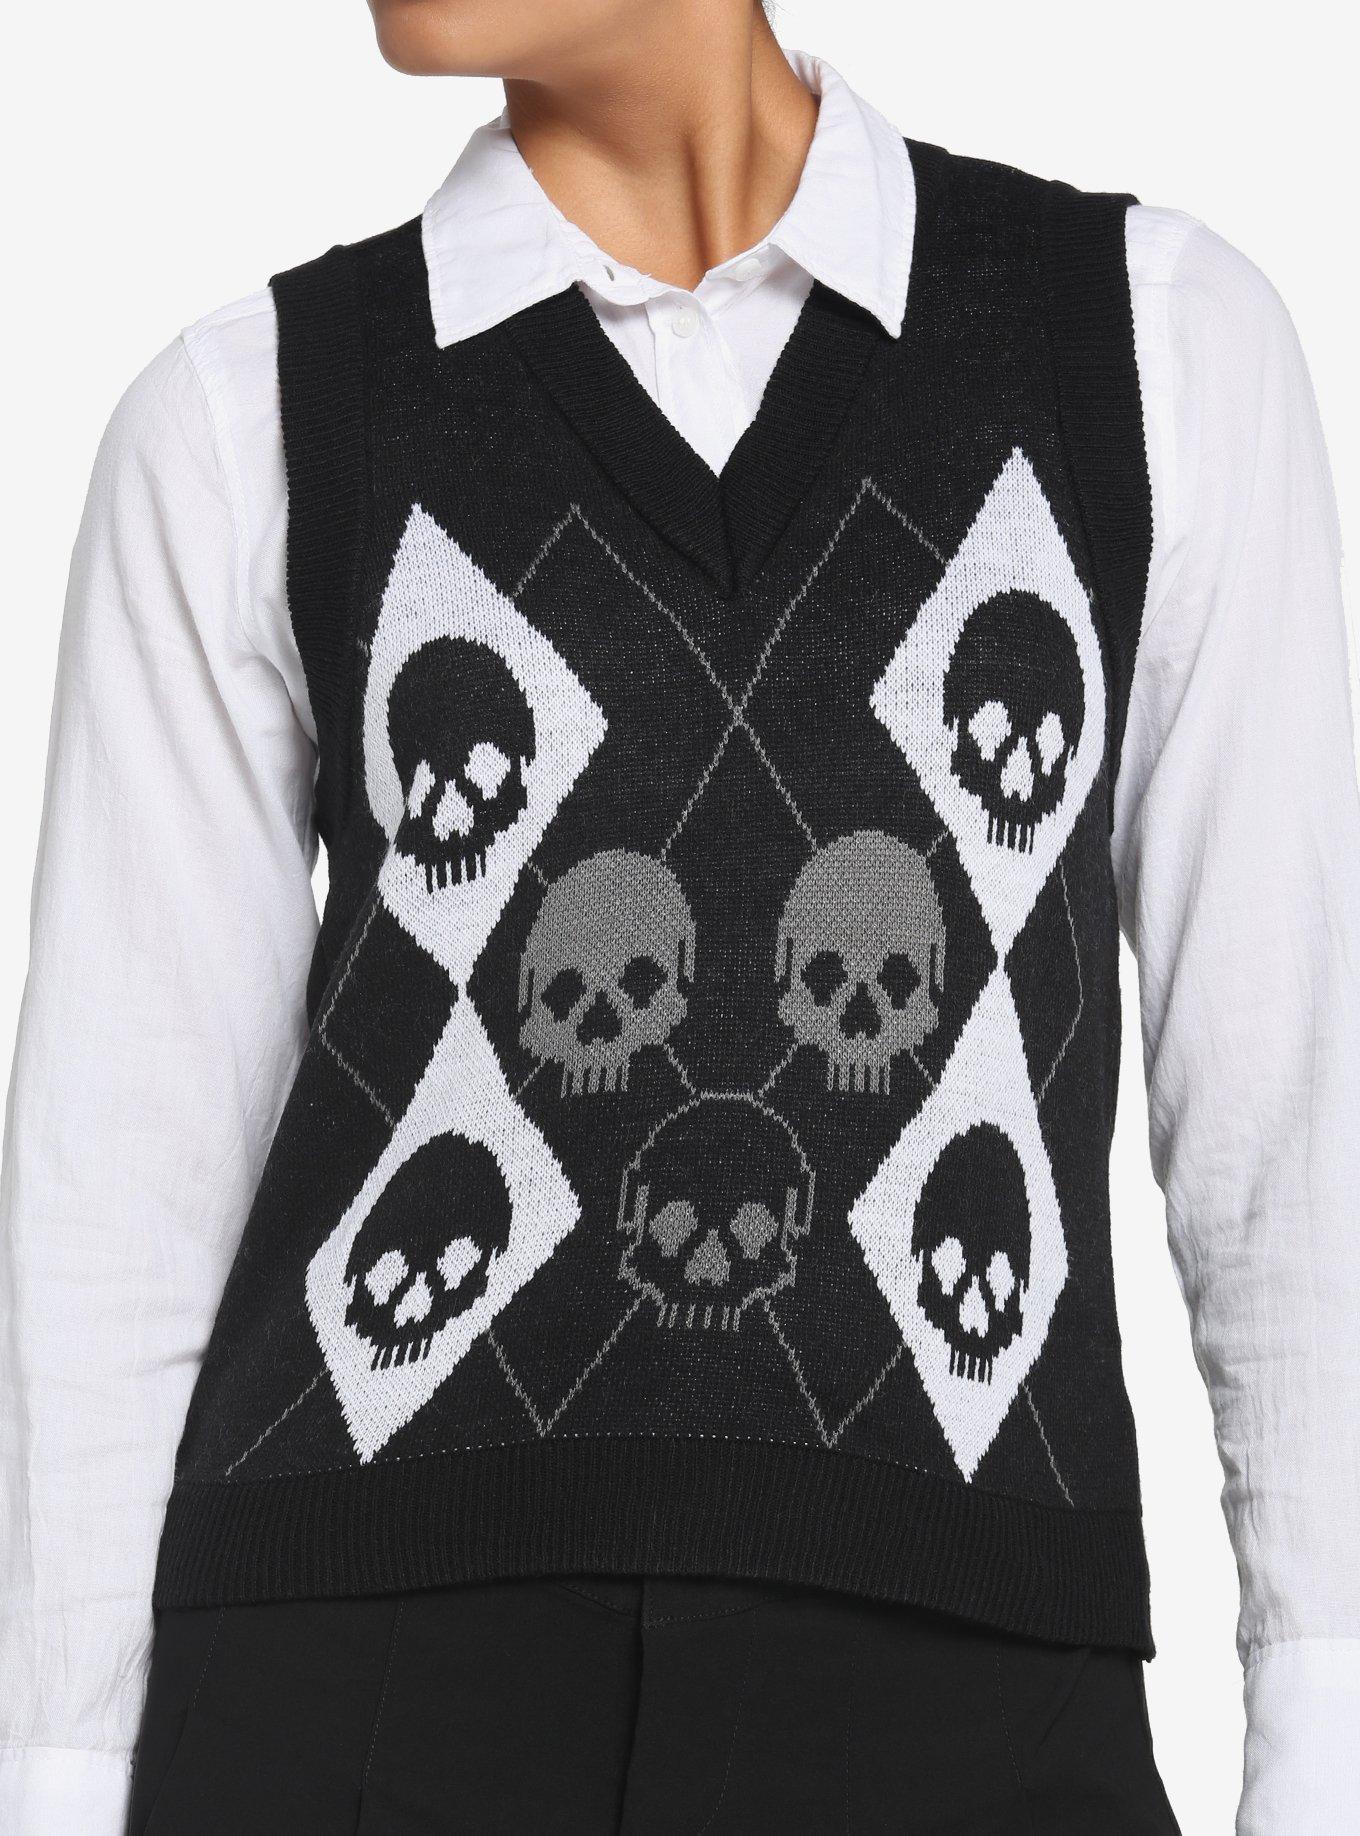 Represalias Nuestra compañía calina Black Skull Argyle Girls Sweater Vest | Hot Topic